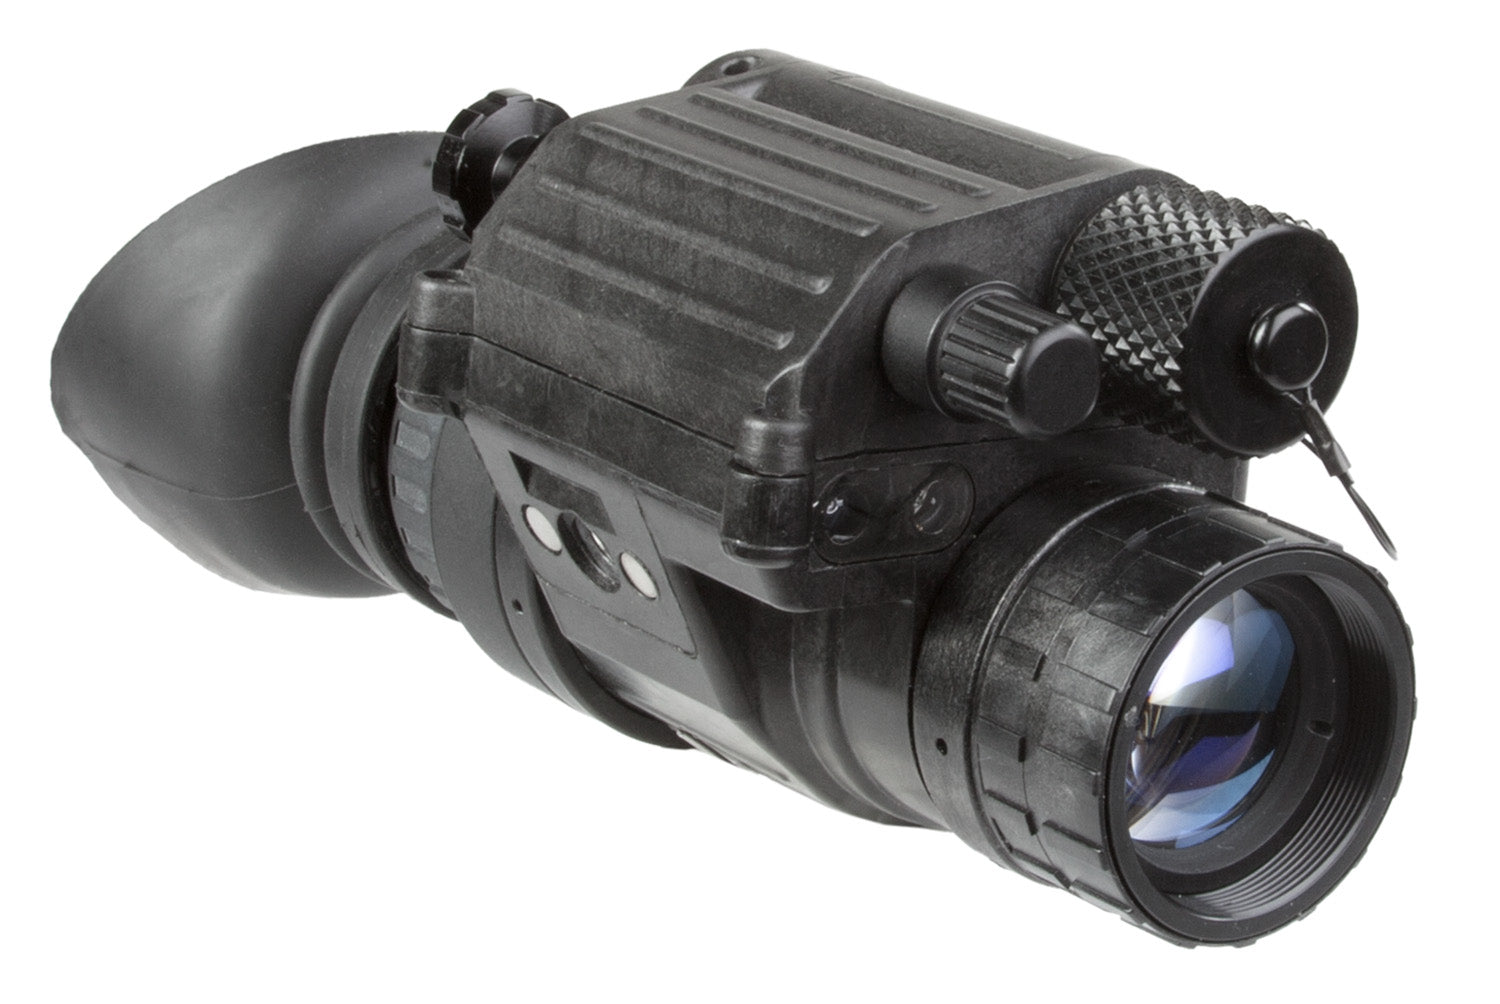 AGM Global Vision  PVS-14 NL1 Night Vision Monocular Black 1x 26mm Generation 2+ Level 1 51-64 lp/mm Resolution